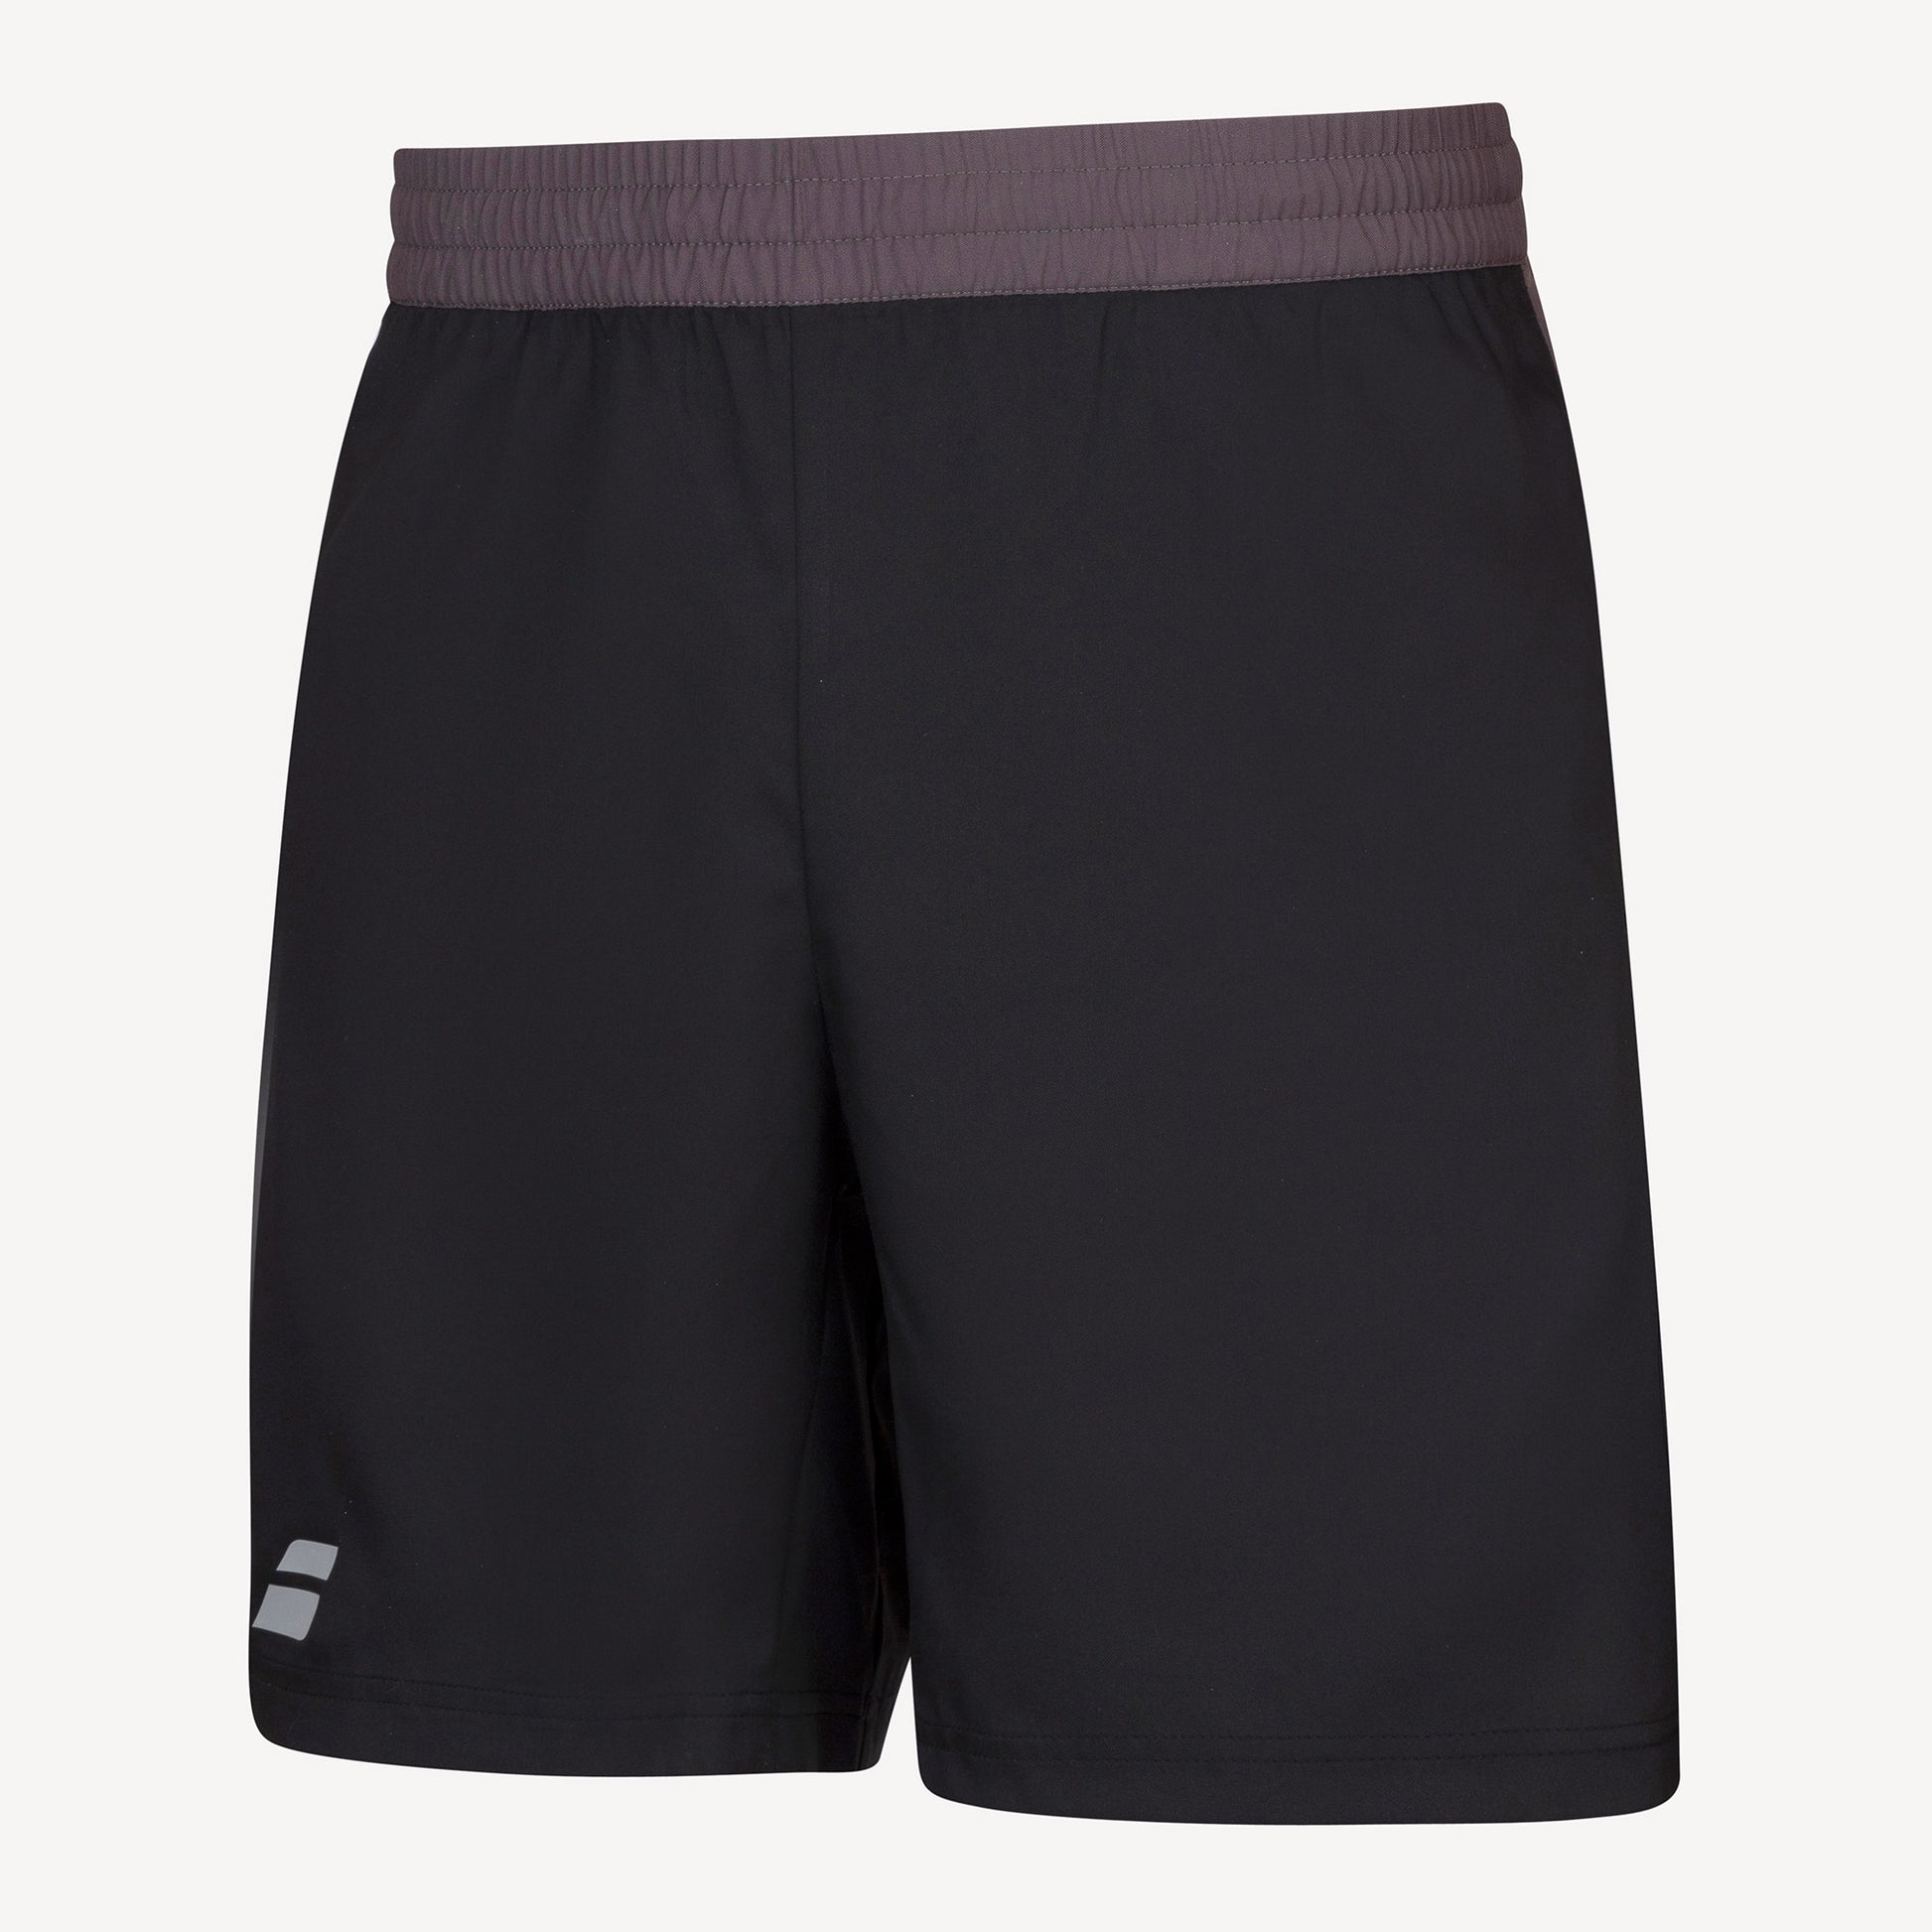 Babolat Play Club Boys' Tennis Shorts Black (1)